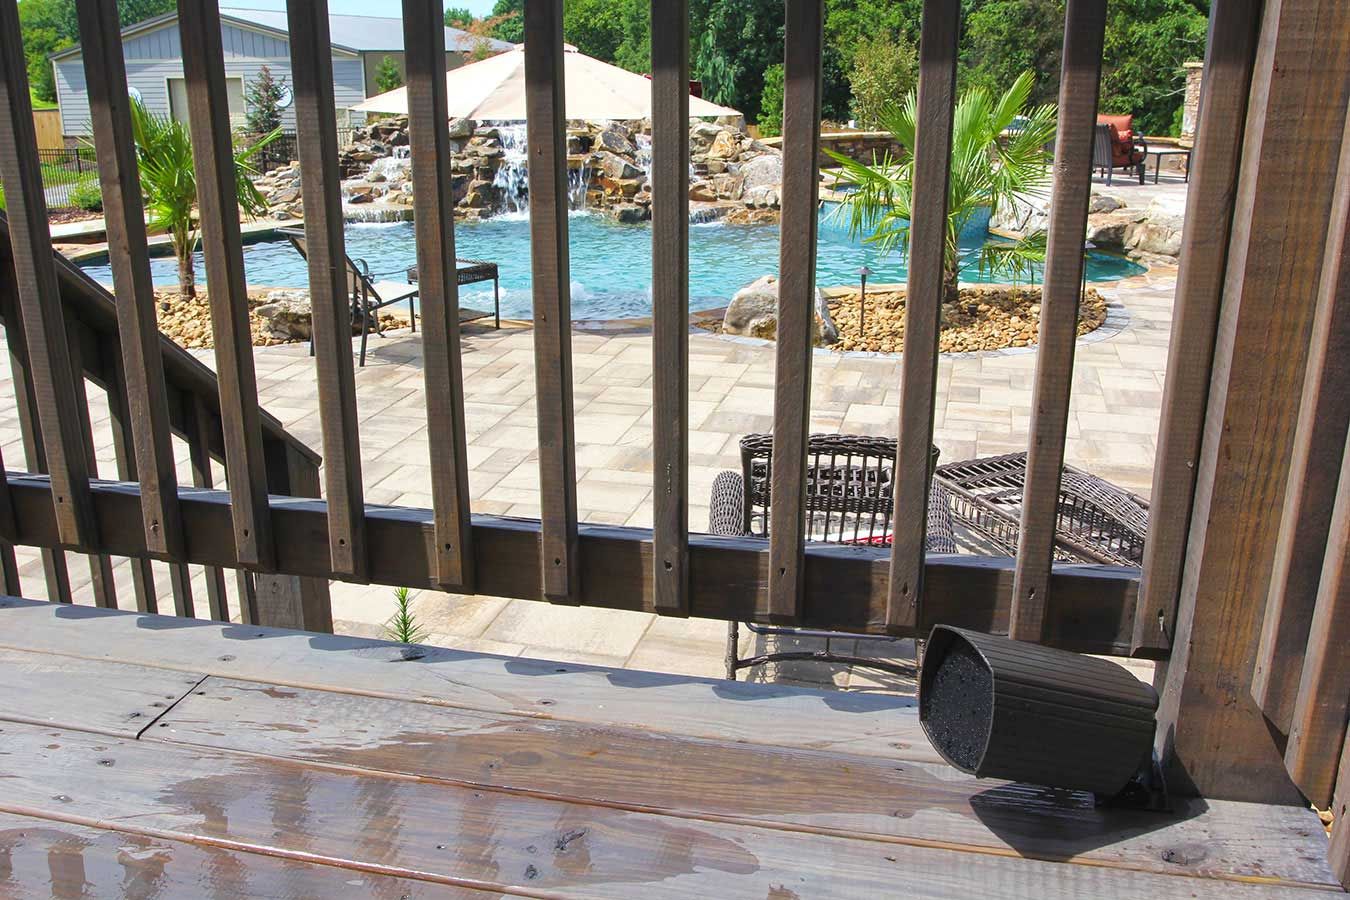 Outdoor speaker on a patio deck